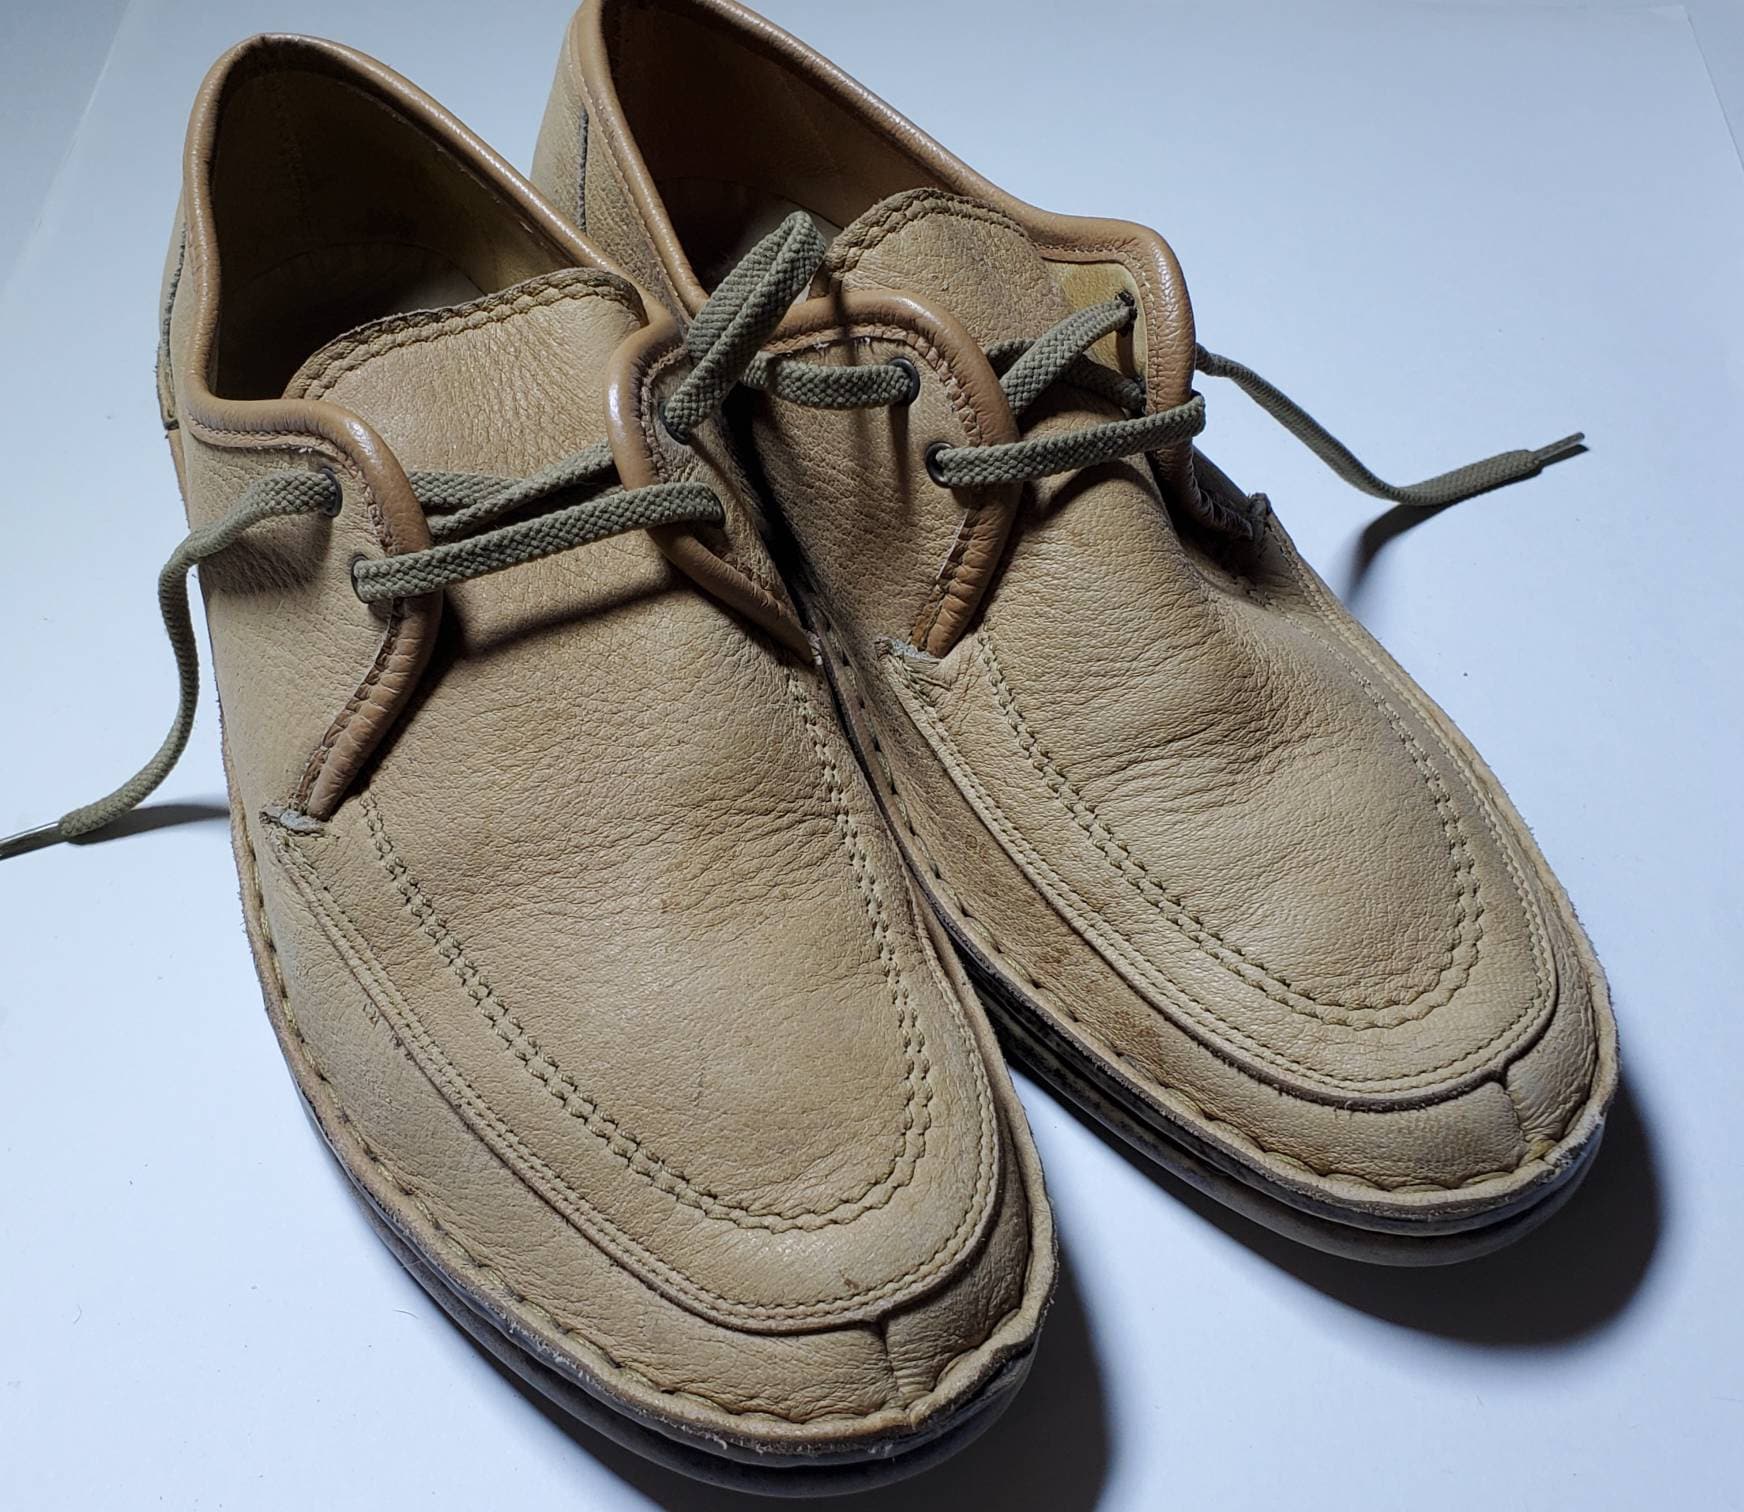 Vintage Clarks Shoes Etsy